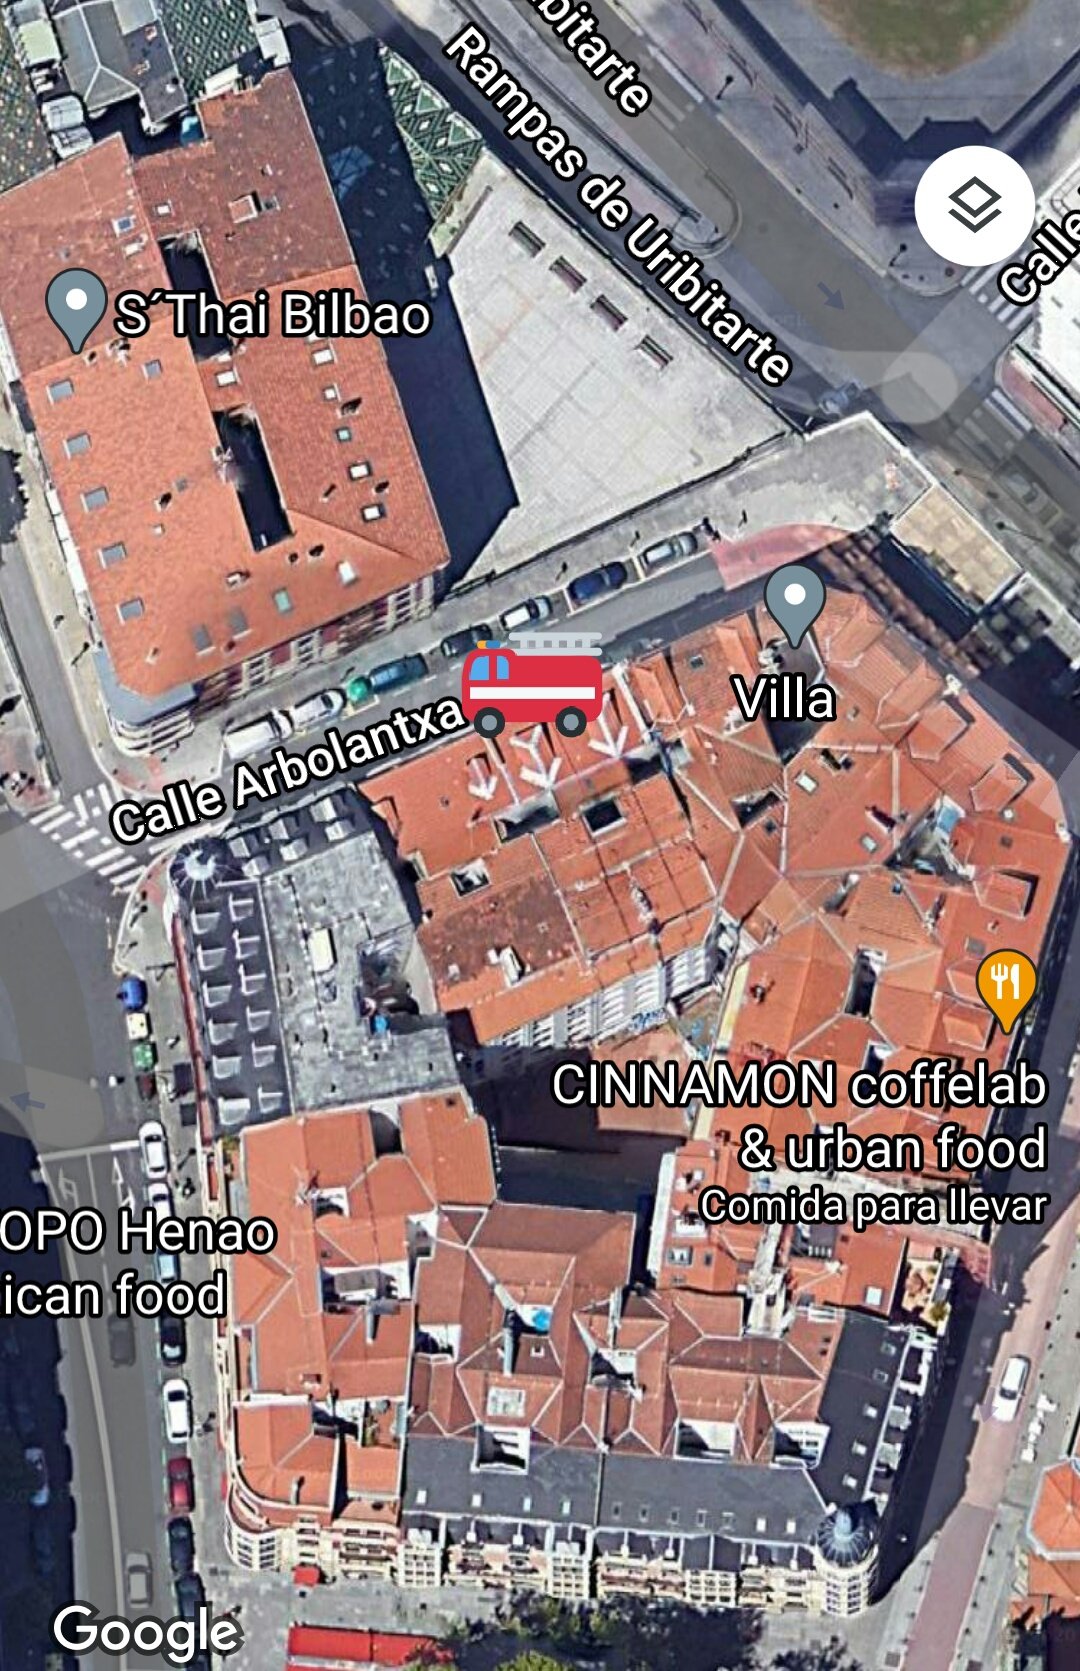 A.D.C.Bomberos Bilbao en Twitter: "Intervención para revisión/saneamiento de fachada. C/ Arbolantxa. Movilizada AEA del Parque de #Miribilla #suhiltzaileak #Bilbao #bomberos 🚨🚒 https://t.co/JK0gnpTkis" / Twitter